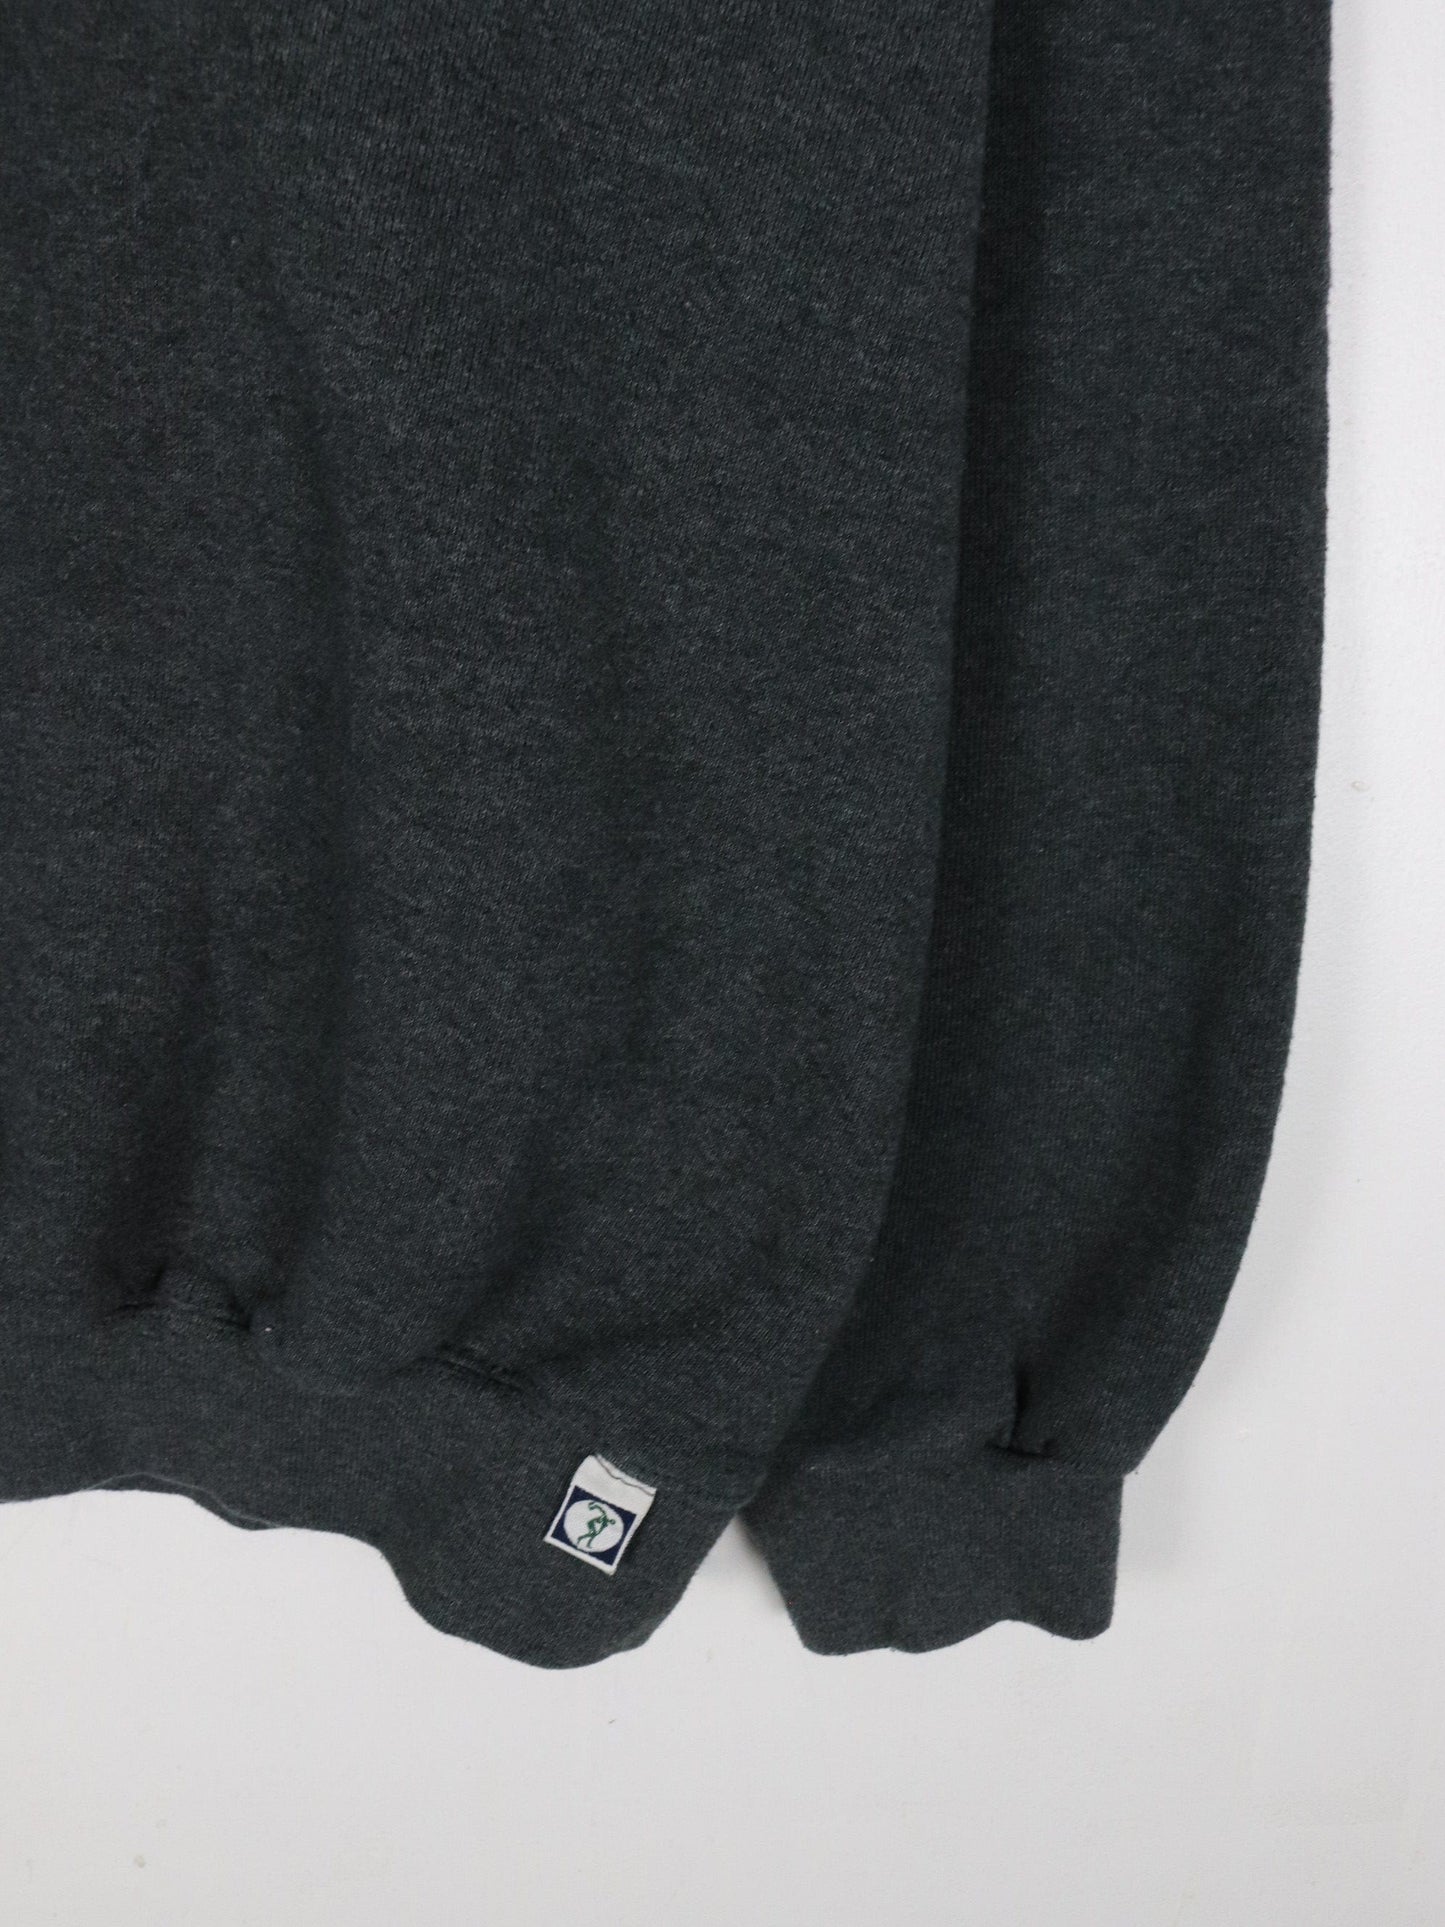 Other Sweatshirts & Hoodies Vintage Discus Athletics Sweatshirt Mens Large Grey Blank Sweater